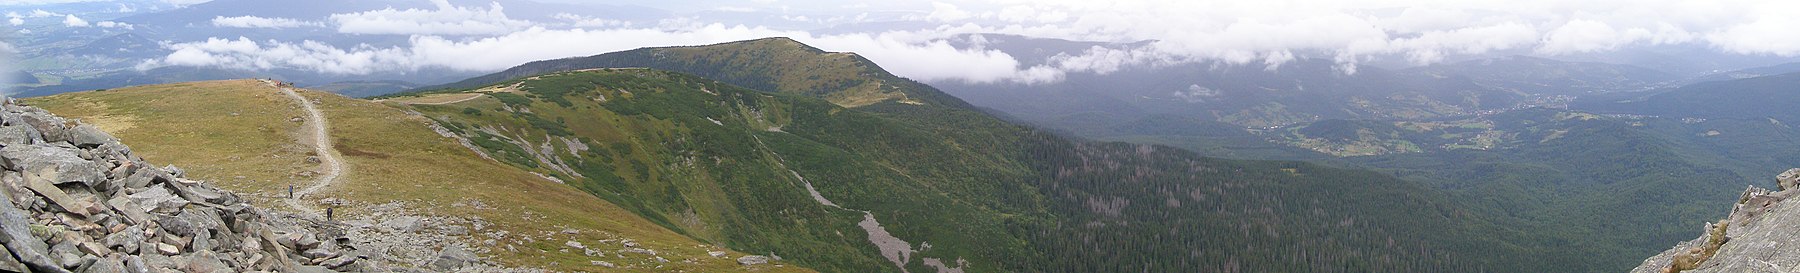 BgPN Babia Gora panorama.jpg